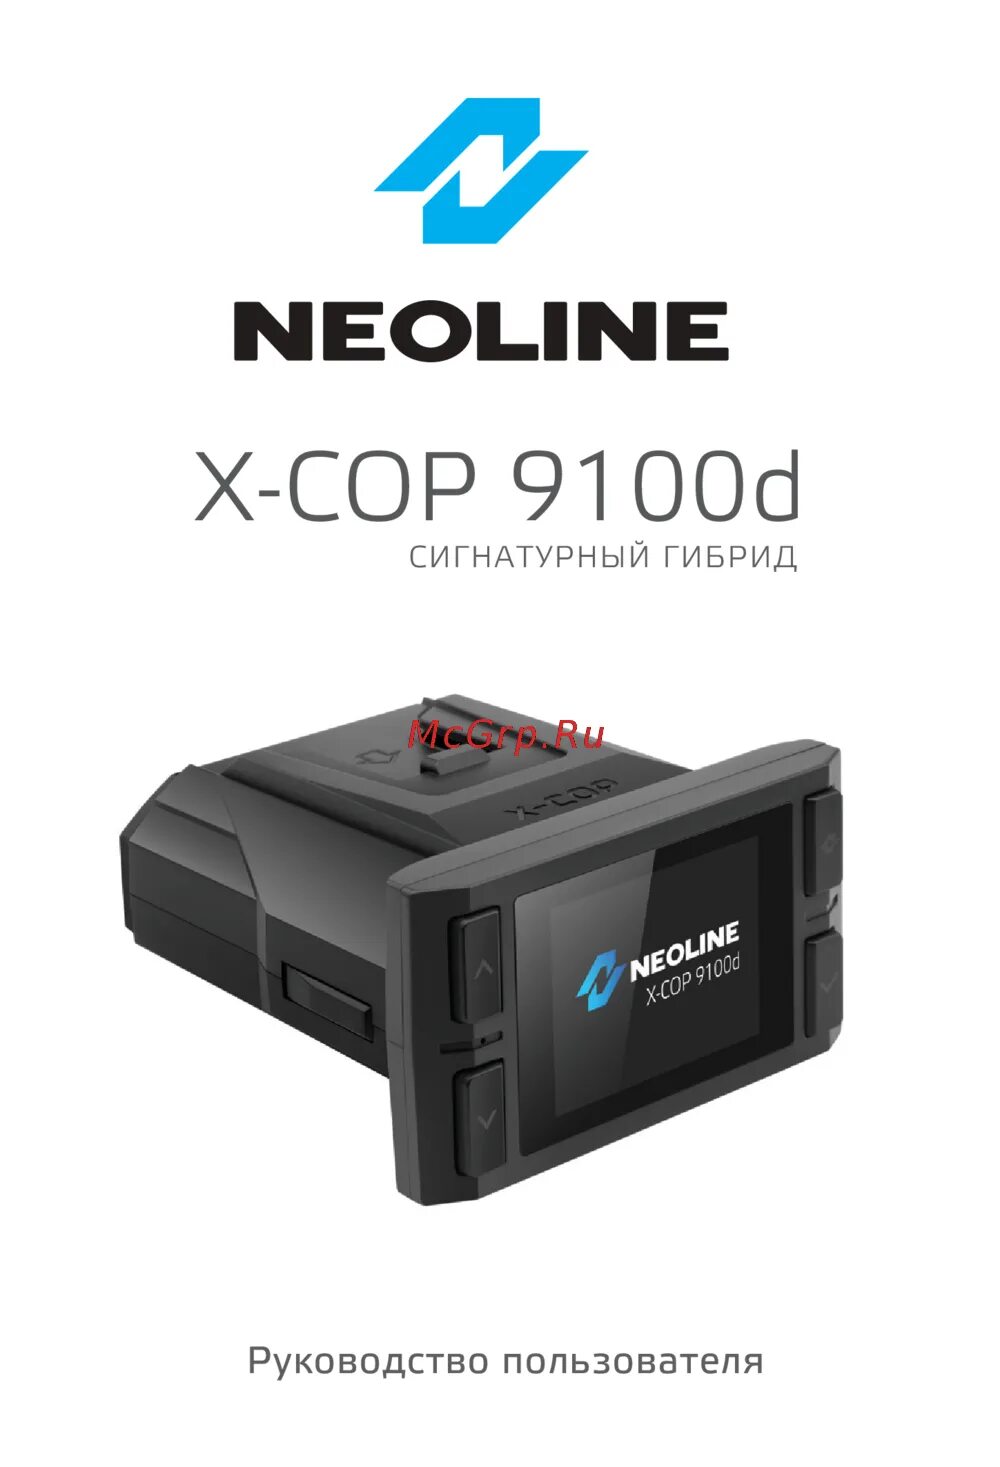 Neoline x cop 9100c. Видеорегистратор Неолайн 9100. Видеорегистратор Neoline x-cop 9100s. Сигнатурный гибрид Neoline x-cop 9100x.